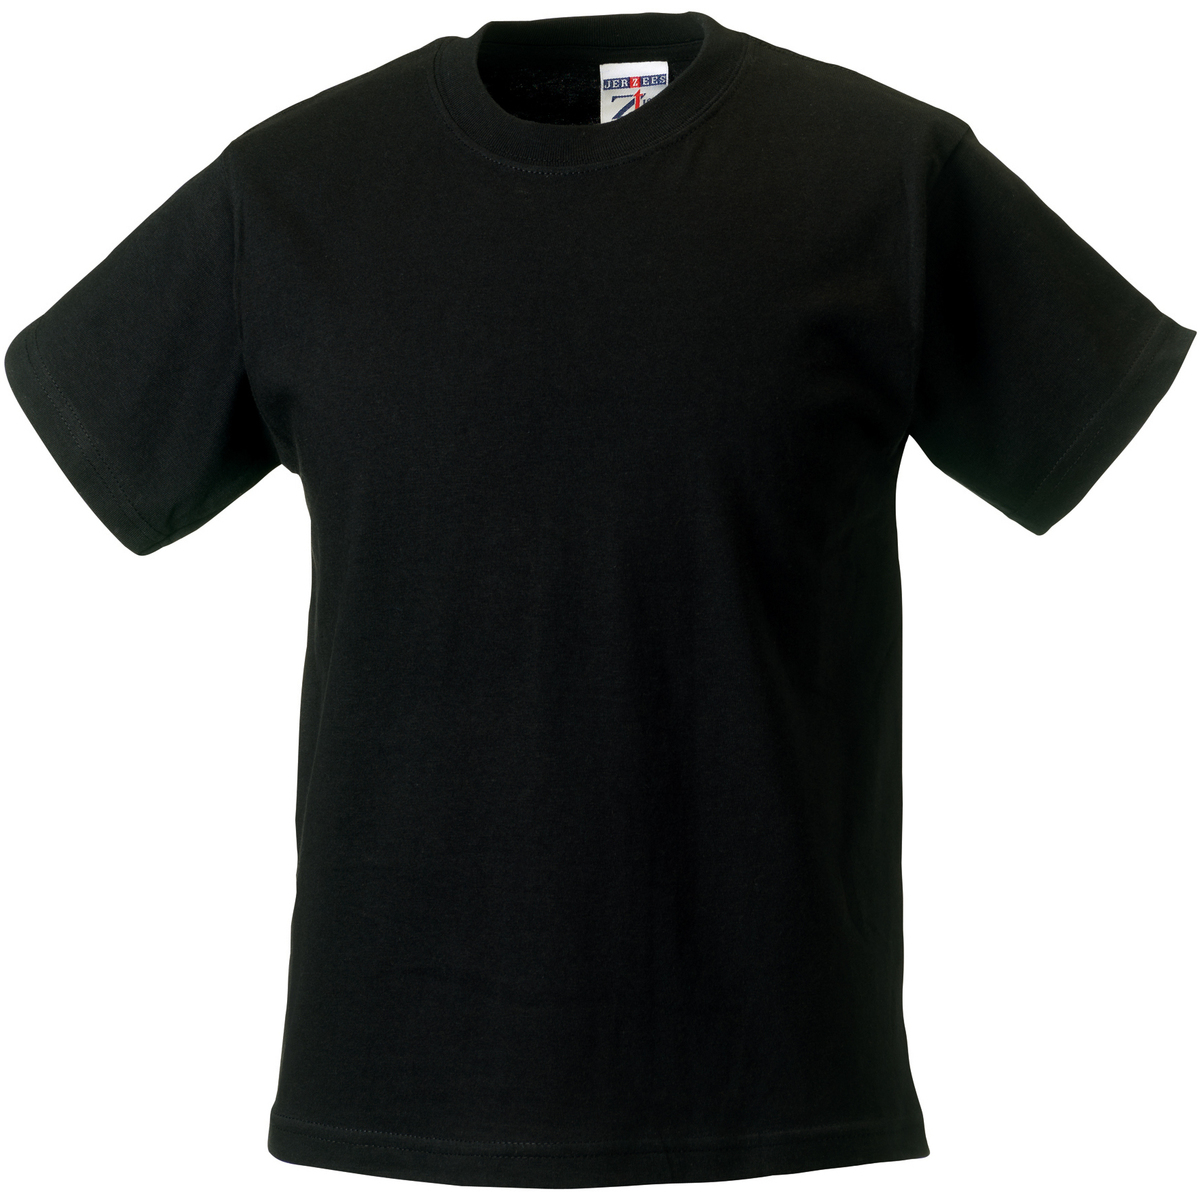 Abbigliamento Unisex bambino T-shirt maniche corte Jerzees Schoolgear ZT180B Nero